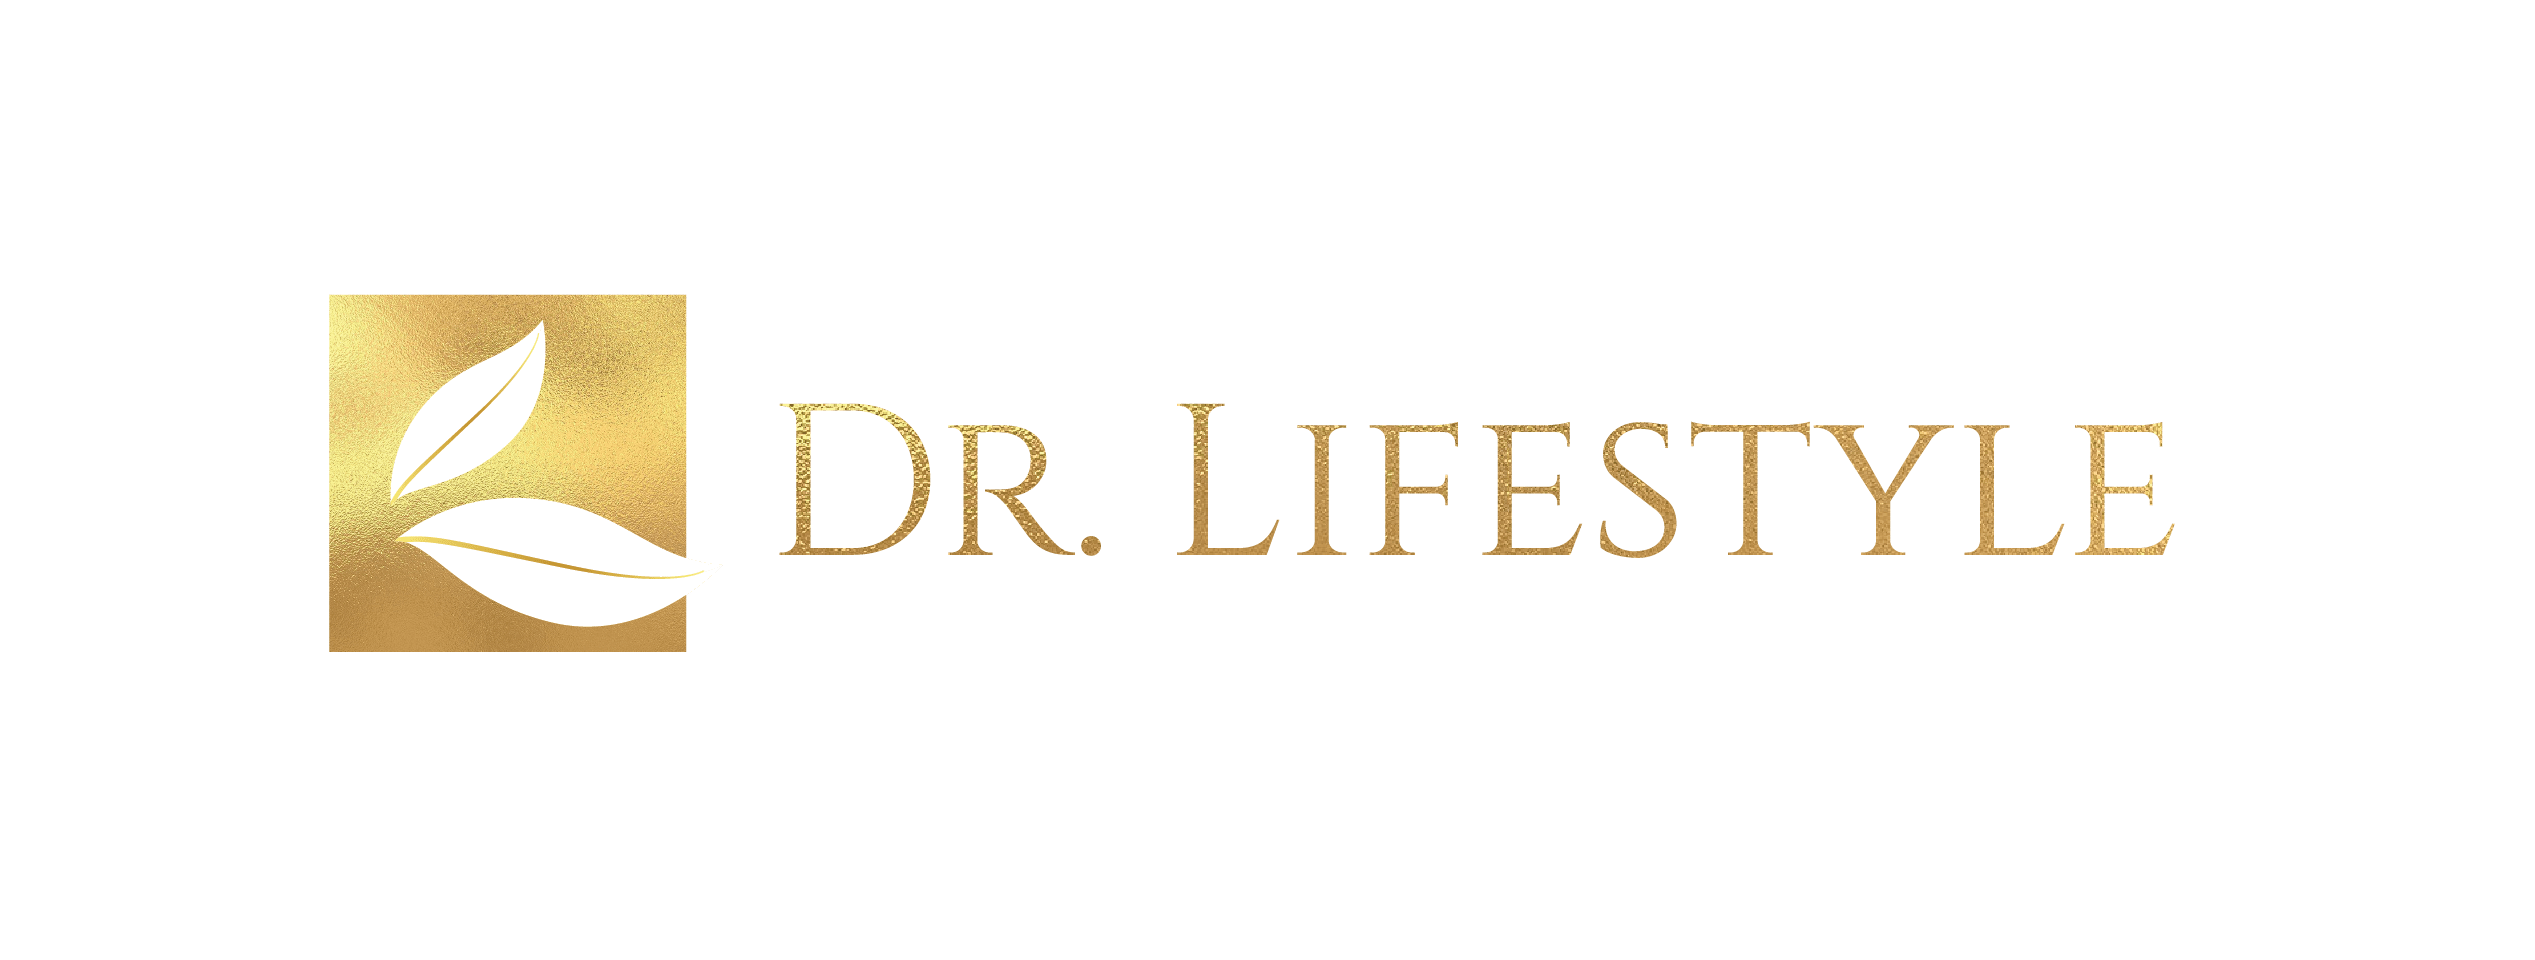 Dr. Melissa Mondala from Dr. Lifestyle Presents "5 Wellness Myths to Avoid!" - FREE, LIVE Webinar